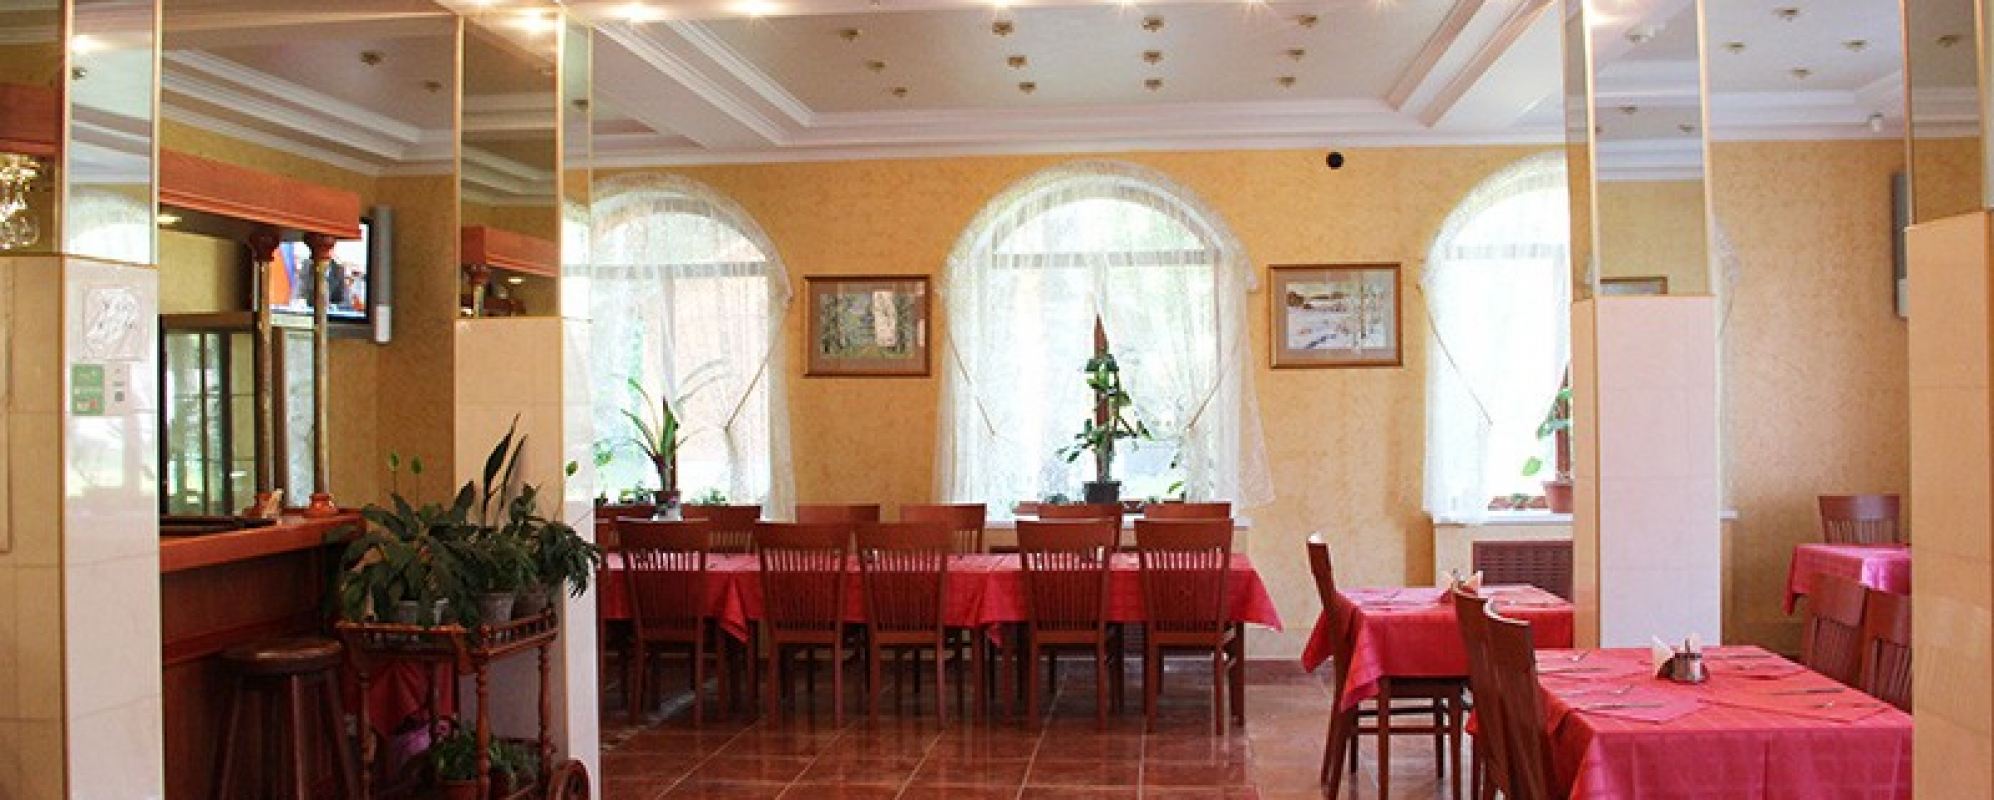 Фотографии банкетного зала Пушкиногорье